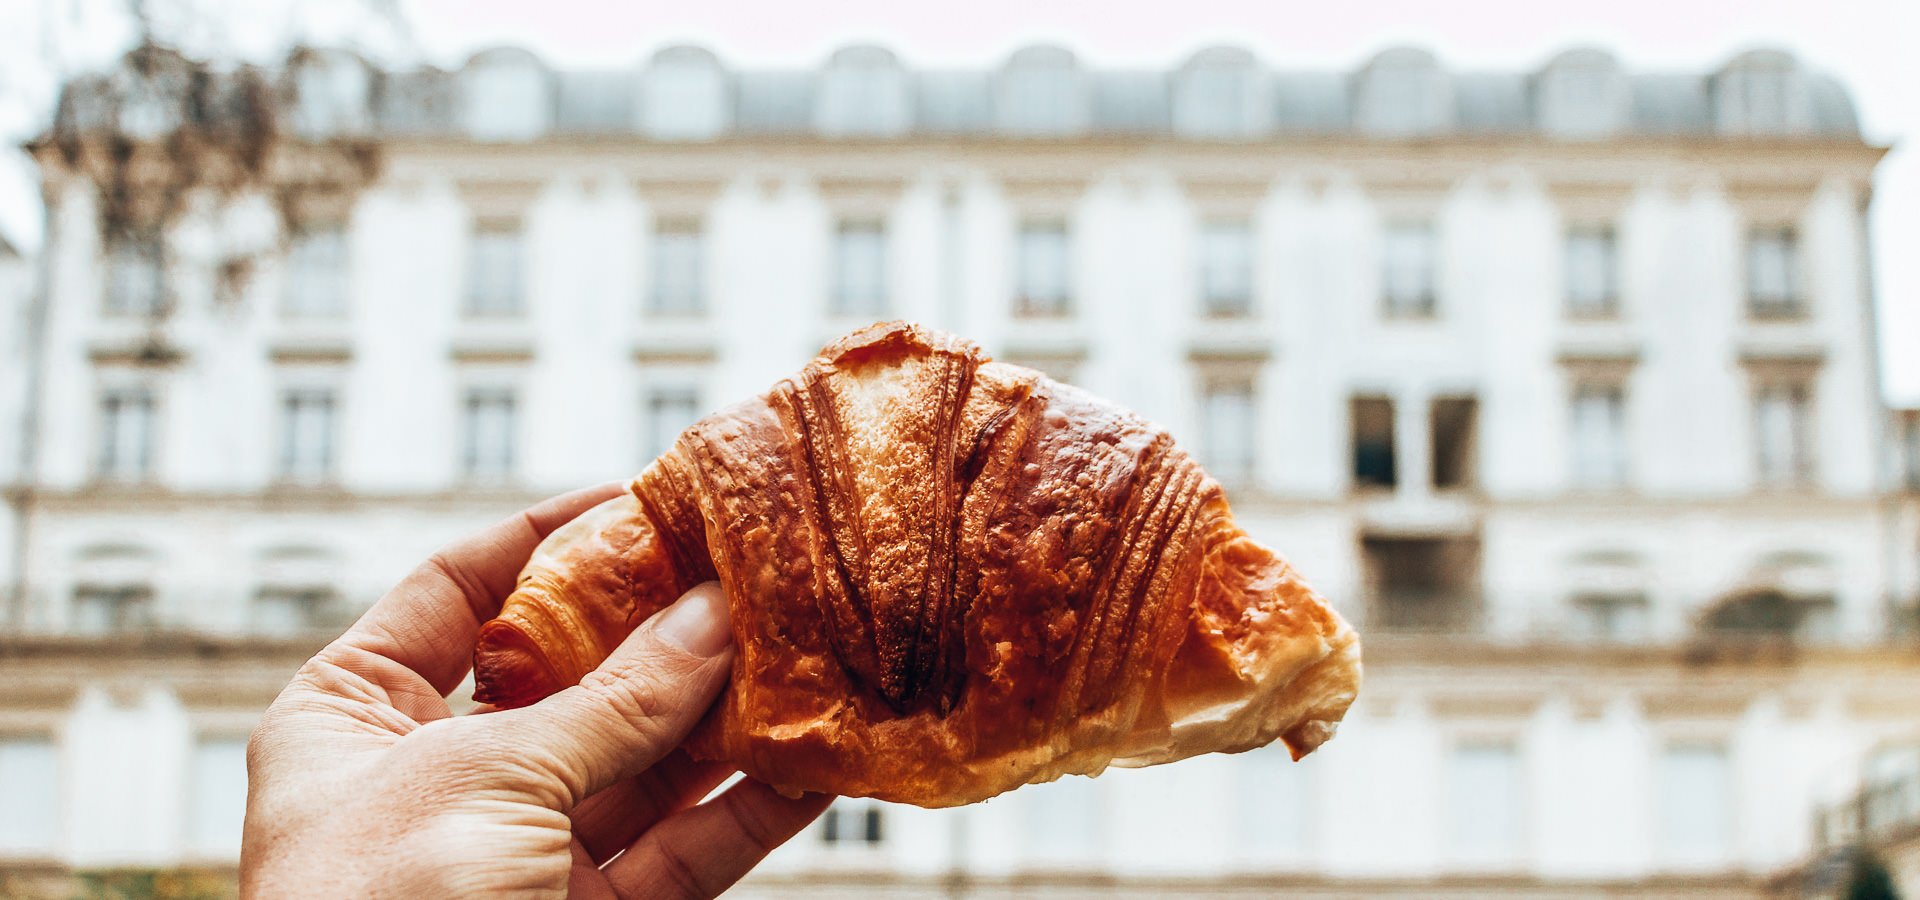 8 Of The Best Bakeries and Pâtisseries In Paris | 48 hours in edinburgh 6